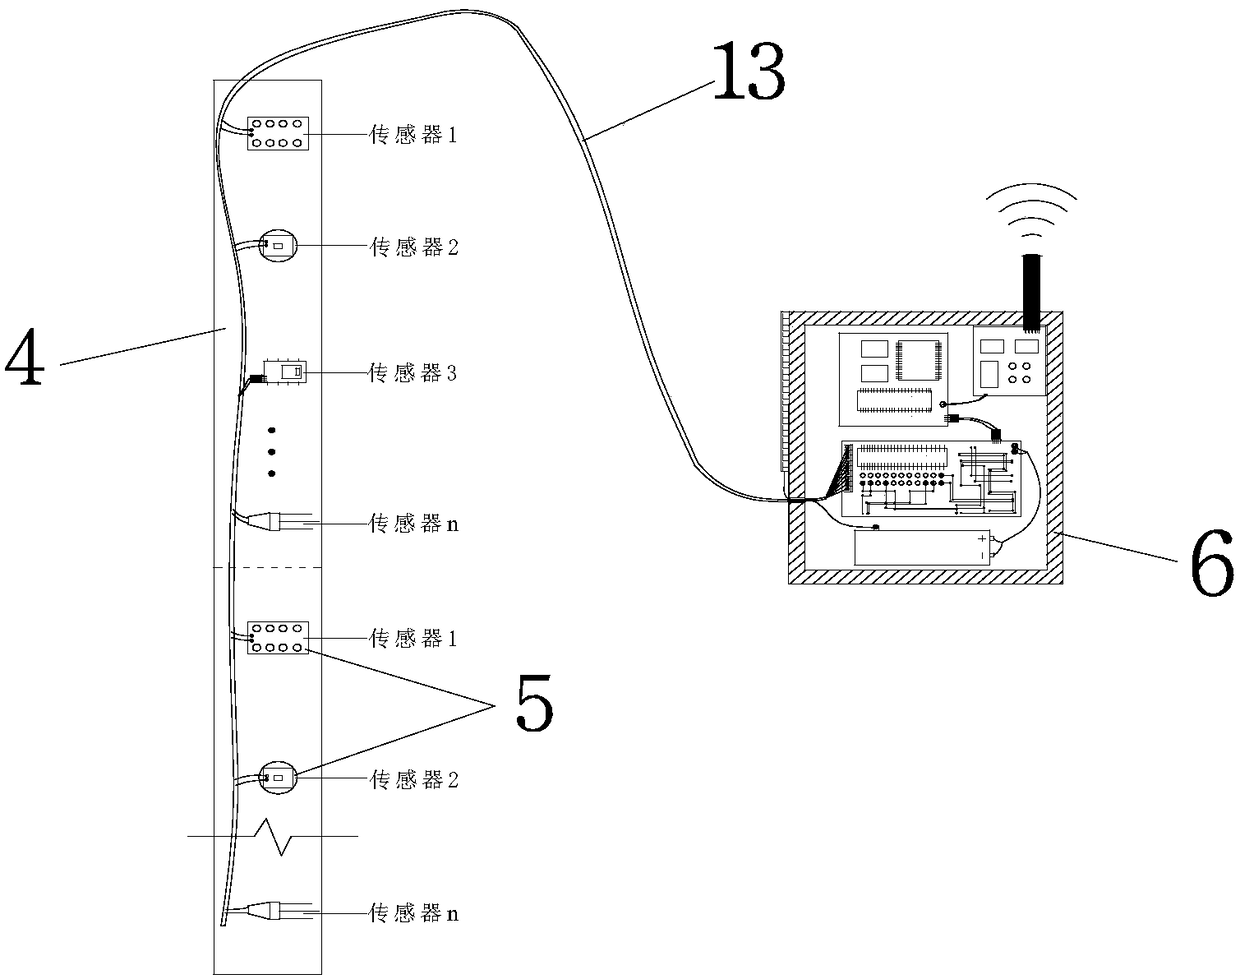 Wireless transmitting and monitoring device on basis of multifunctional self-organized sensors